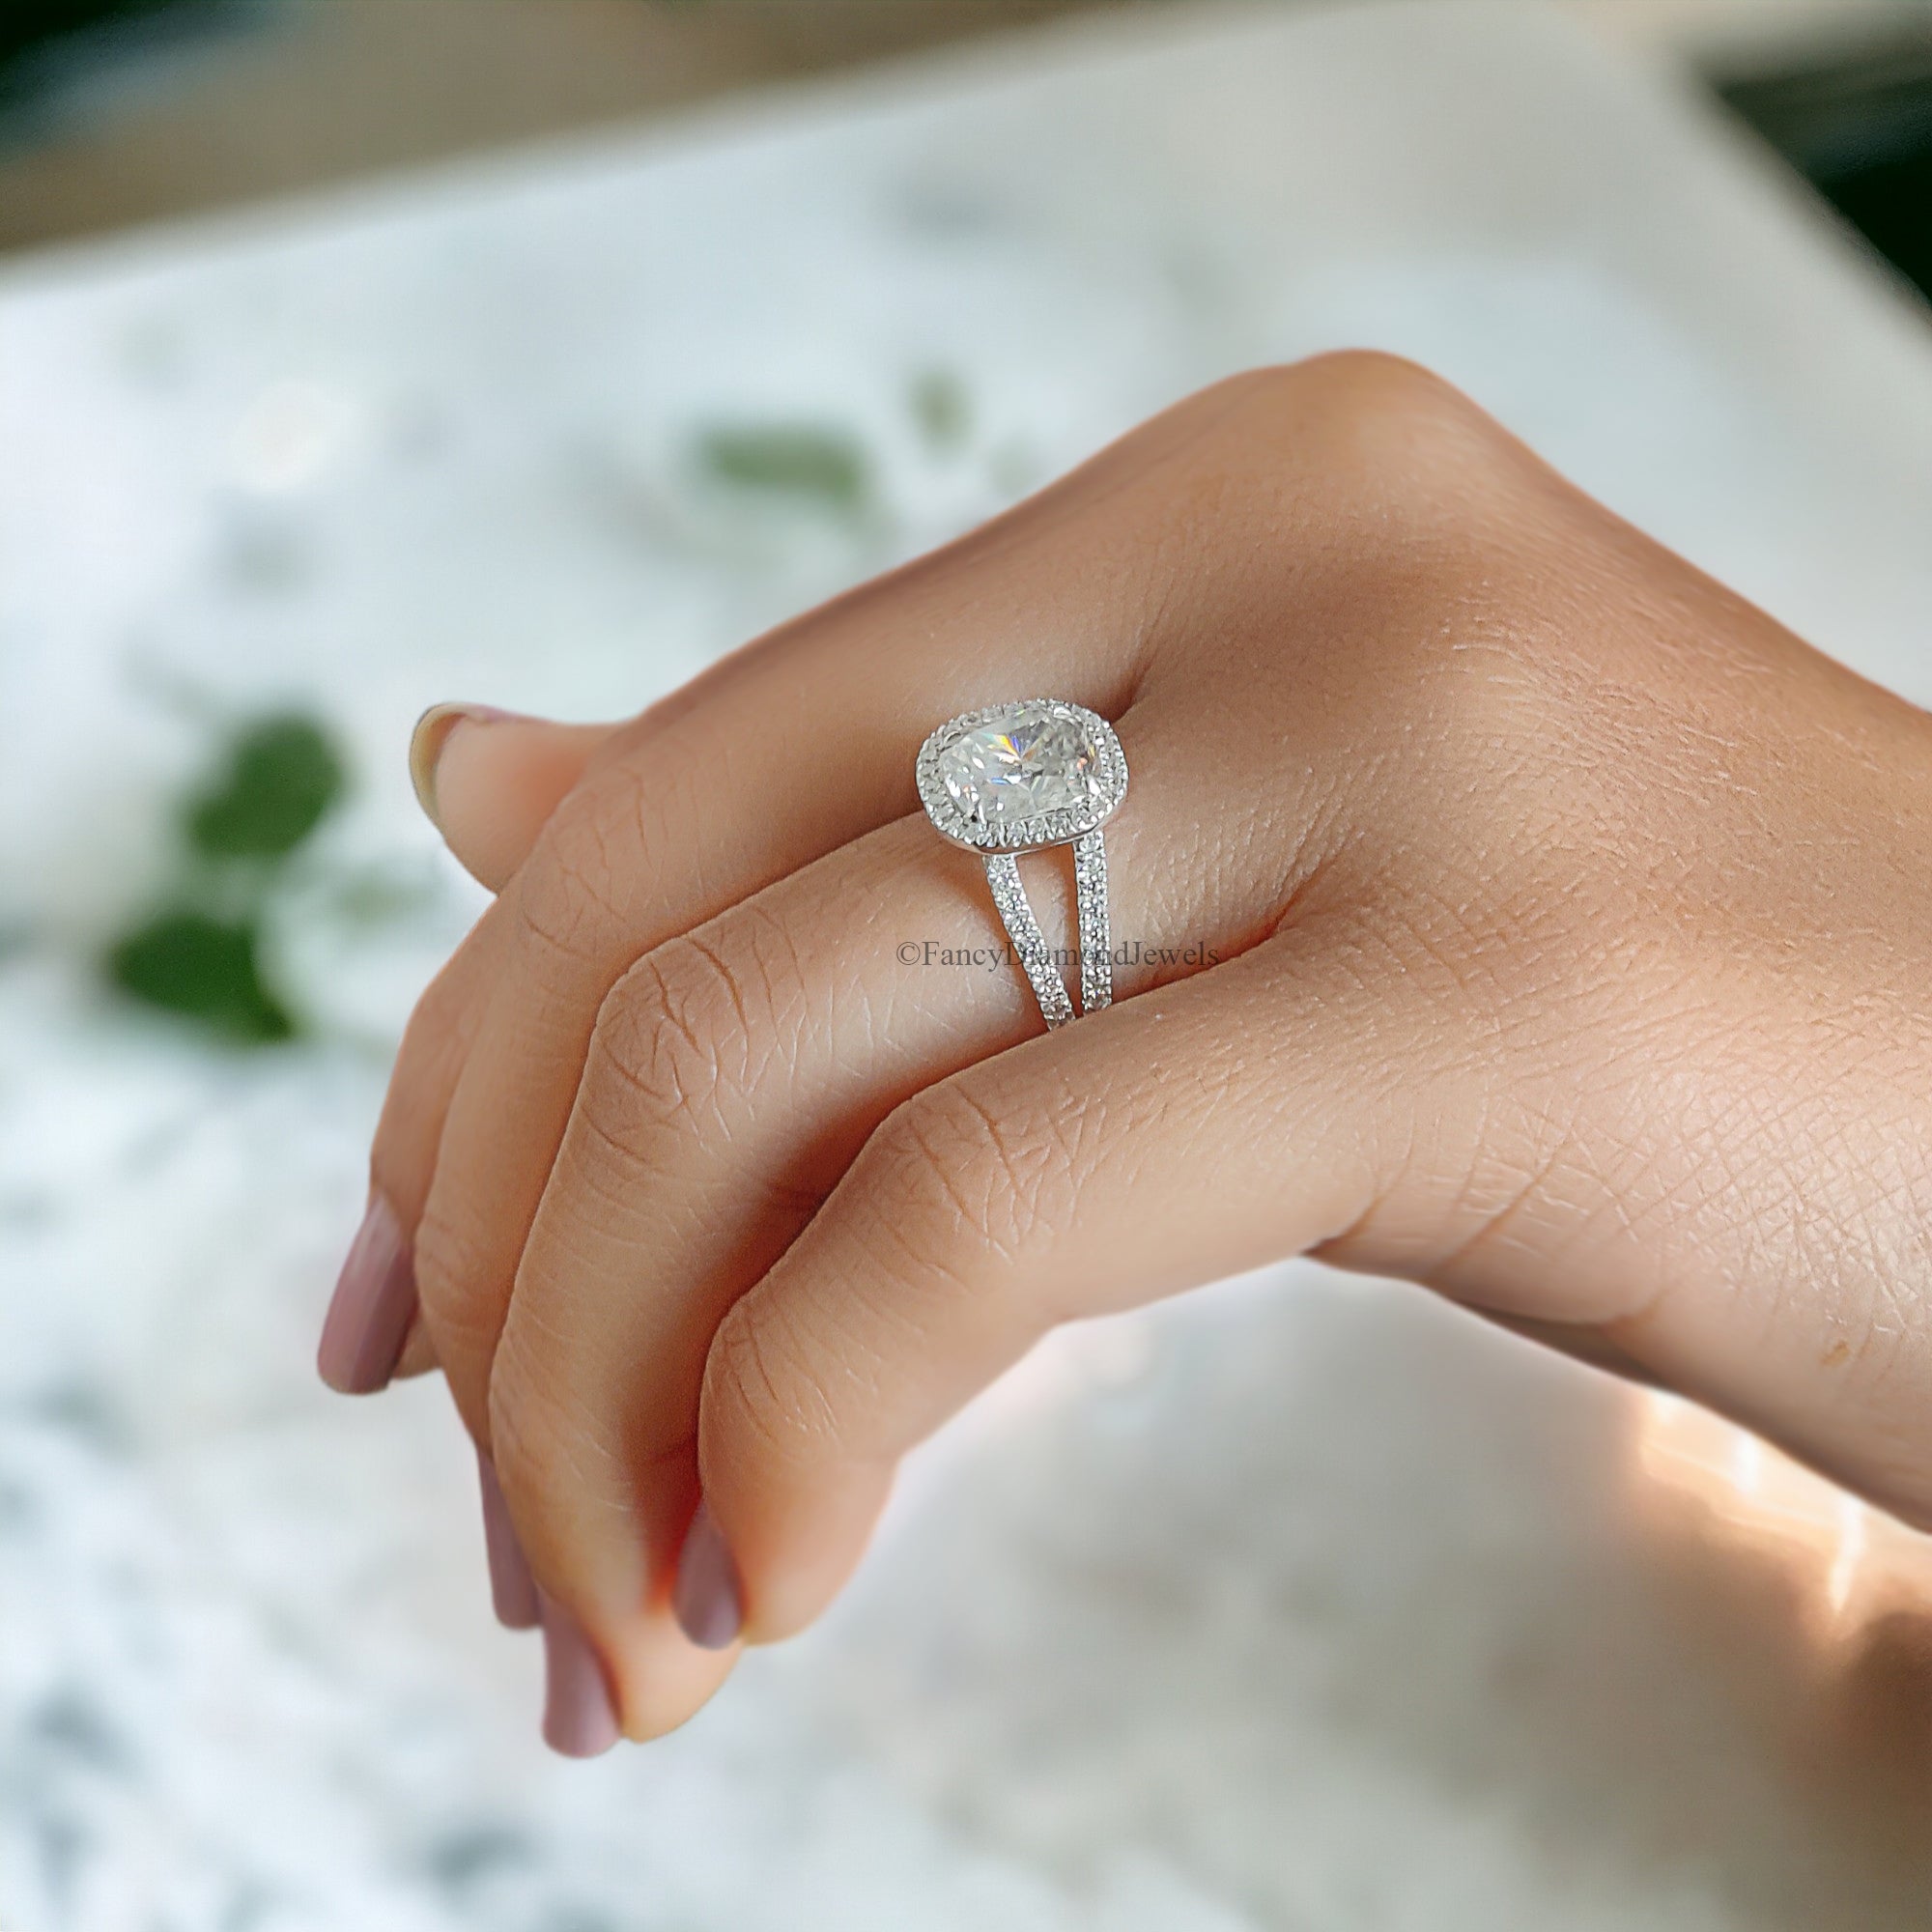 Halo Split Shank Engagement Ring 2.35 TW Cushion Shape Colorless Moissanite Ring Wedding Ring in Solid 10k/14k/18k White Gold Ring FD52